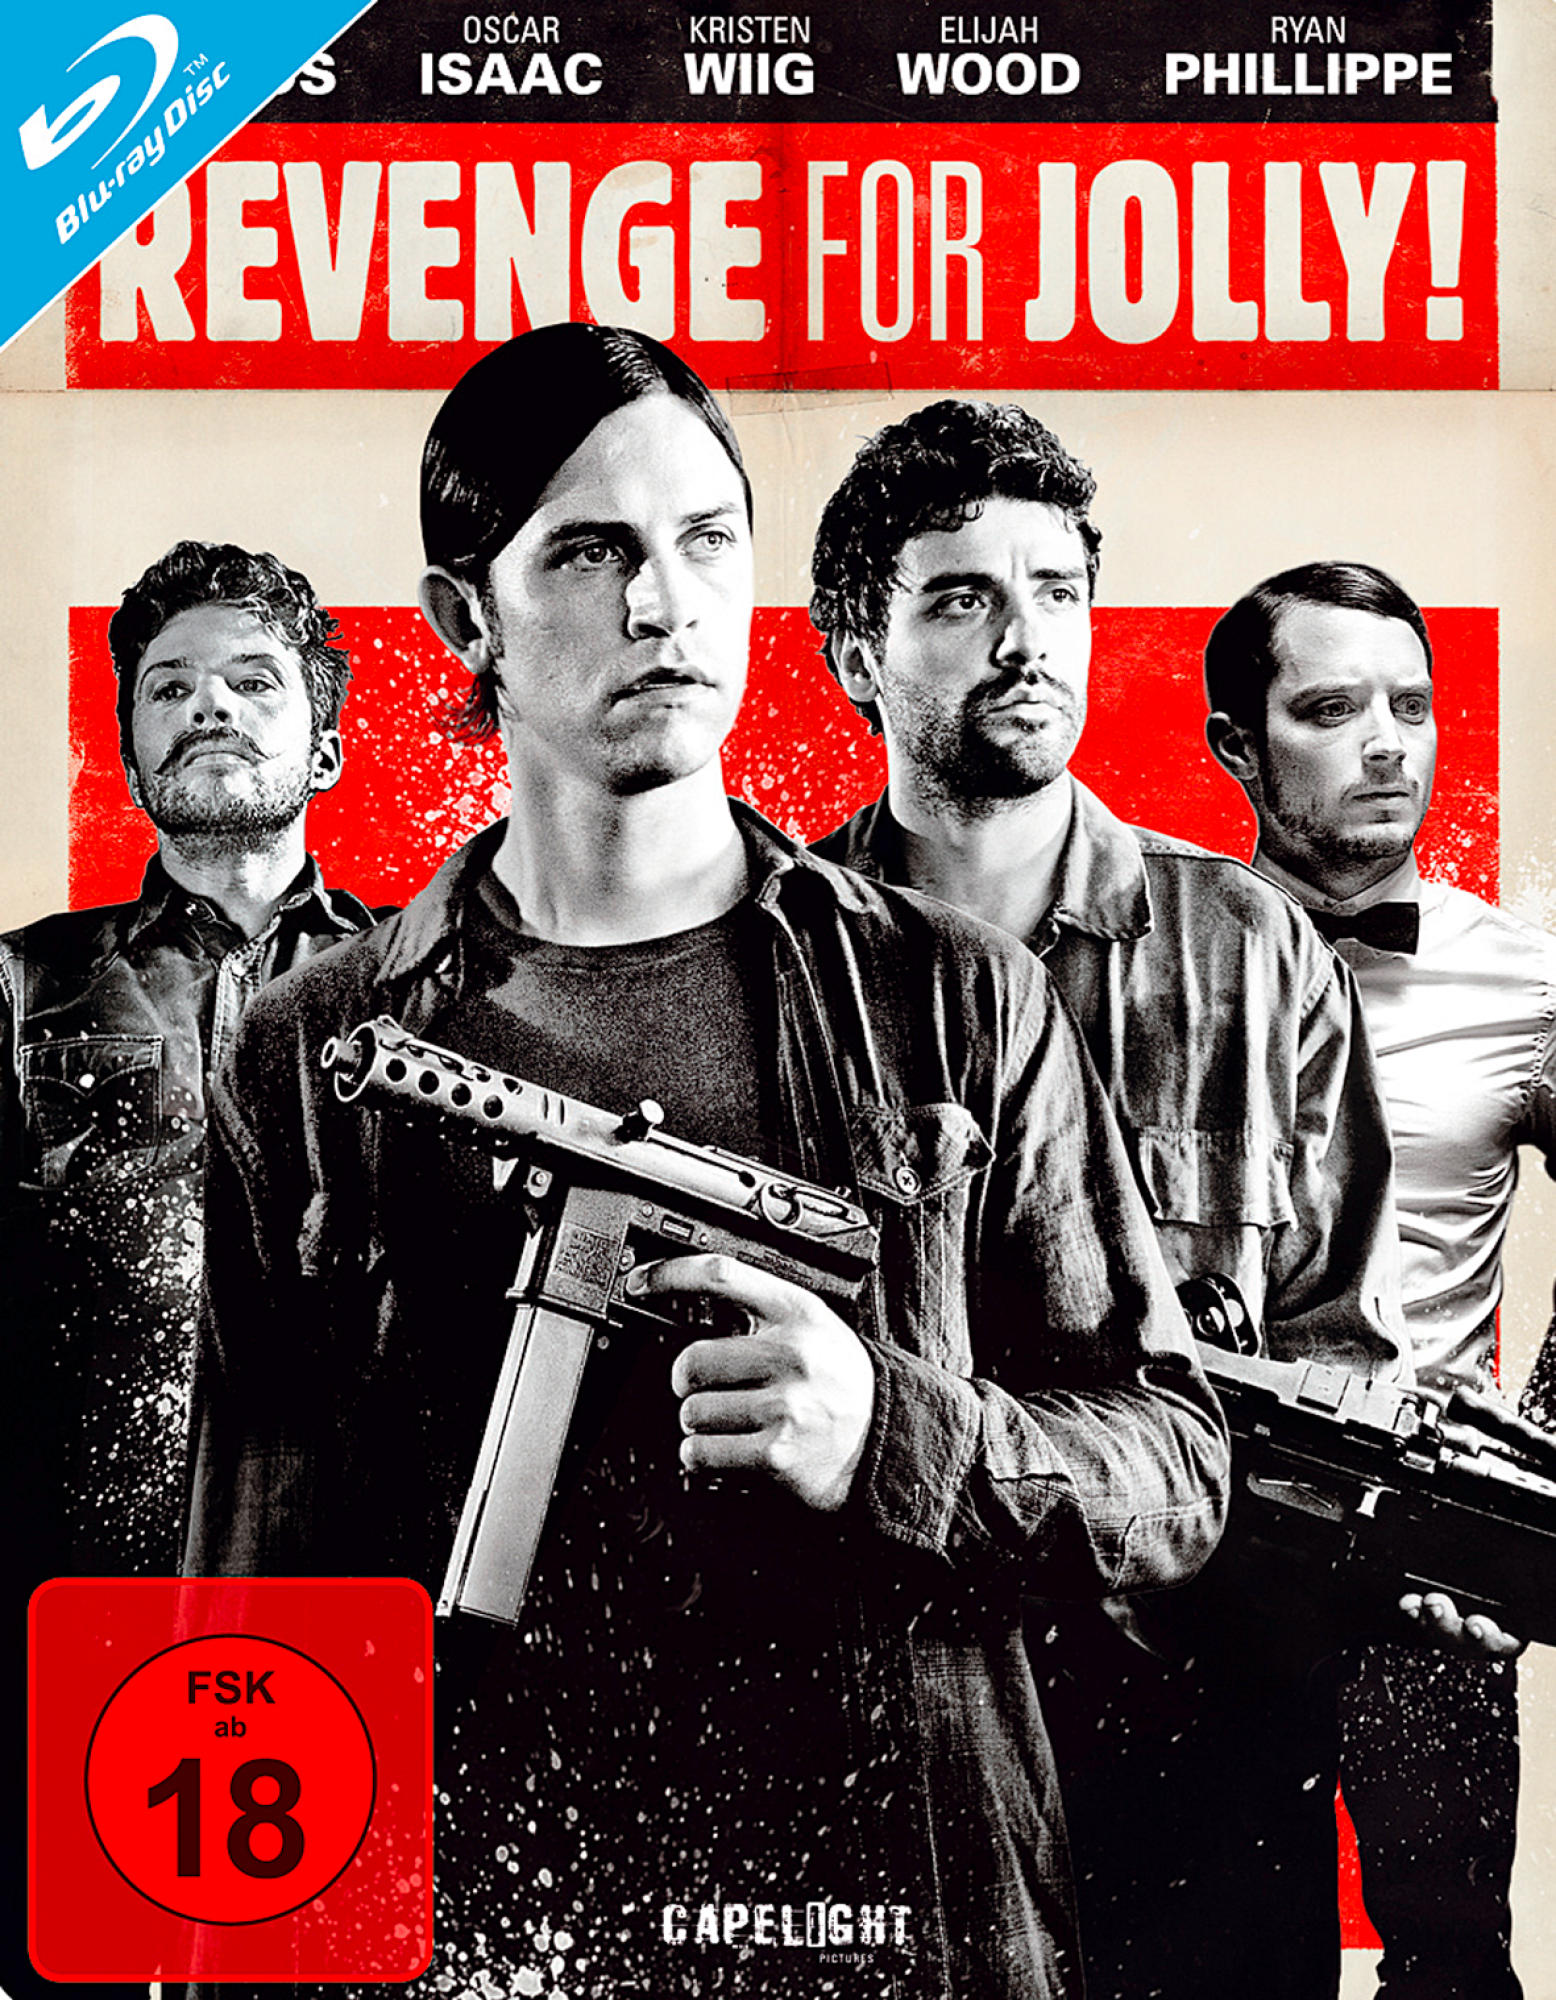 Blu-ray (Steelbook Revenge Edition) Jolly! For